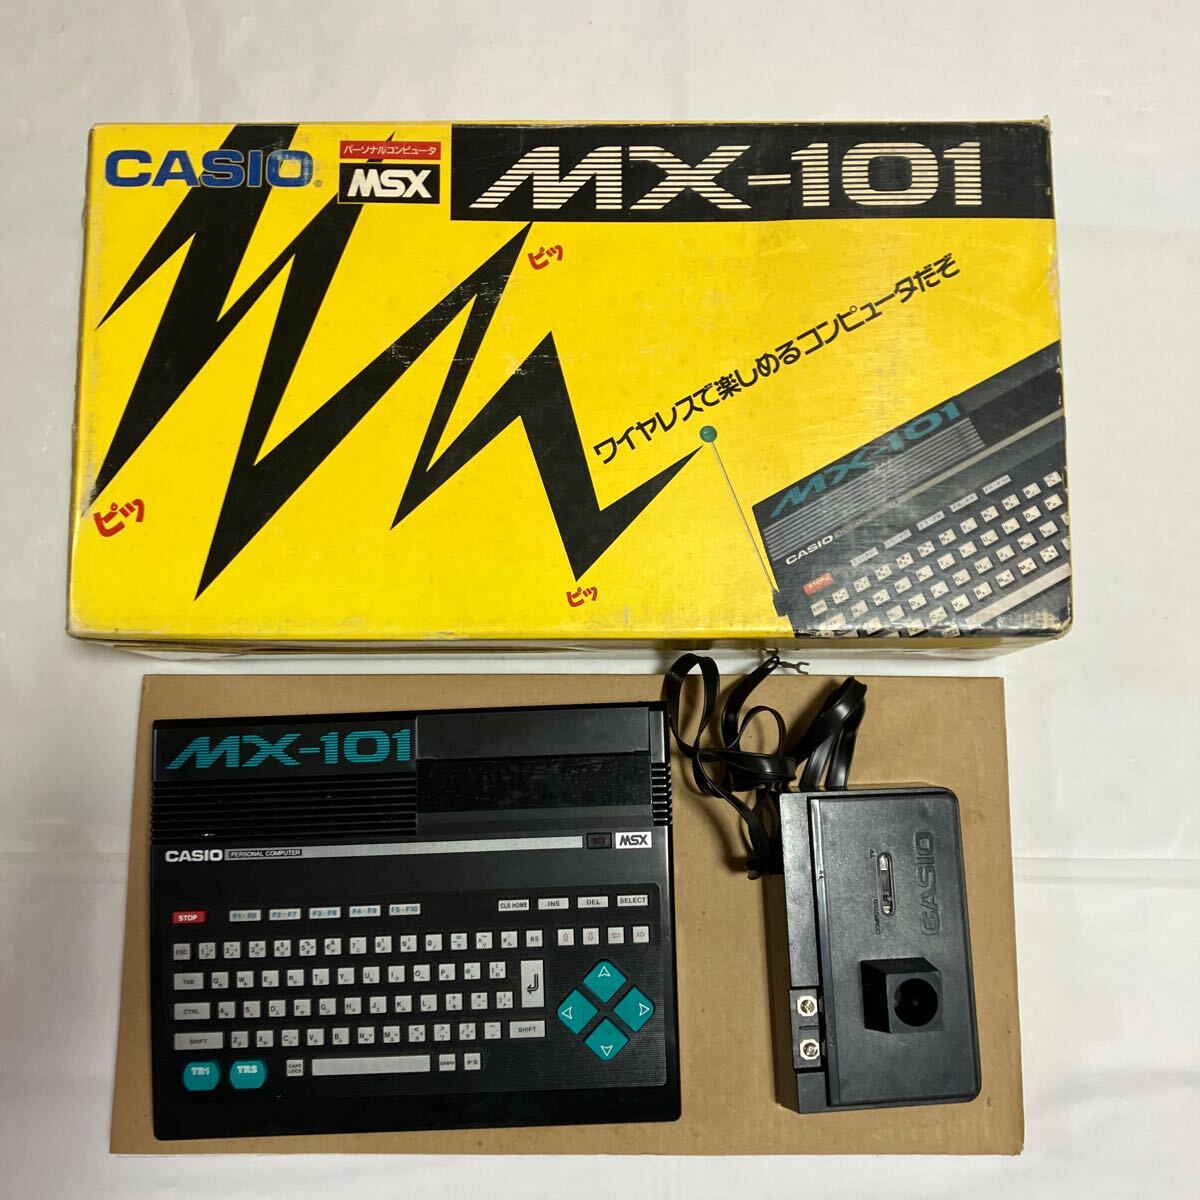 CASIO MSX MX-101 Junk 